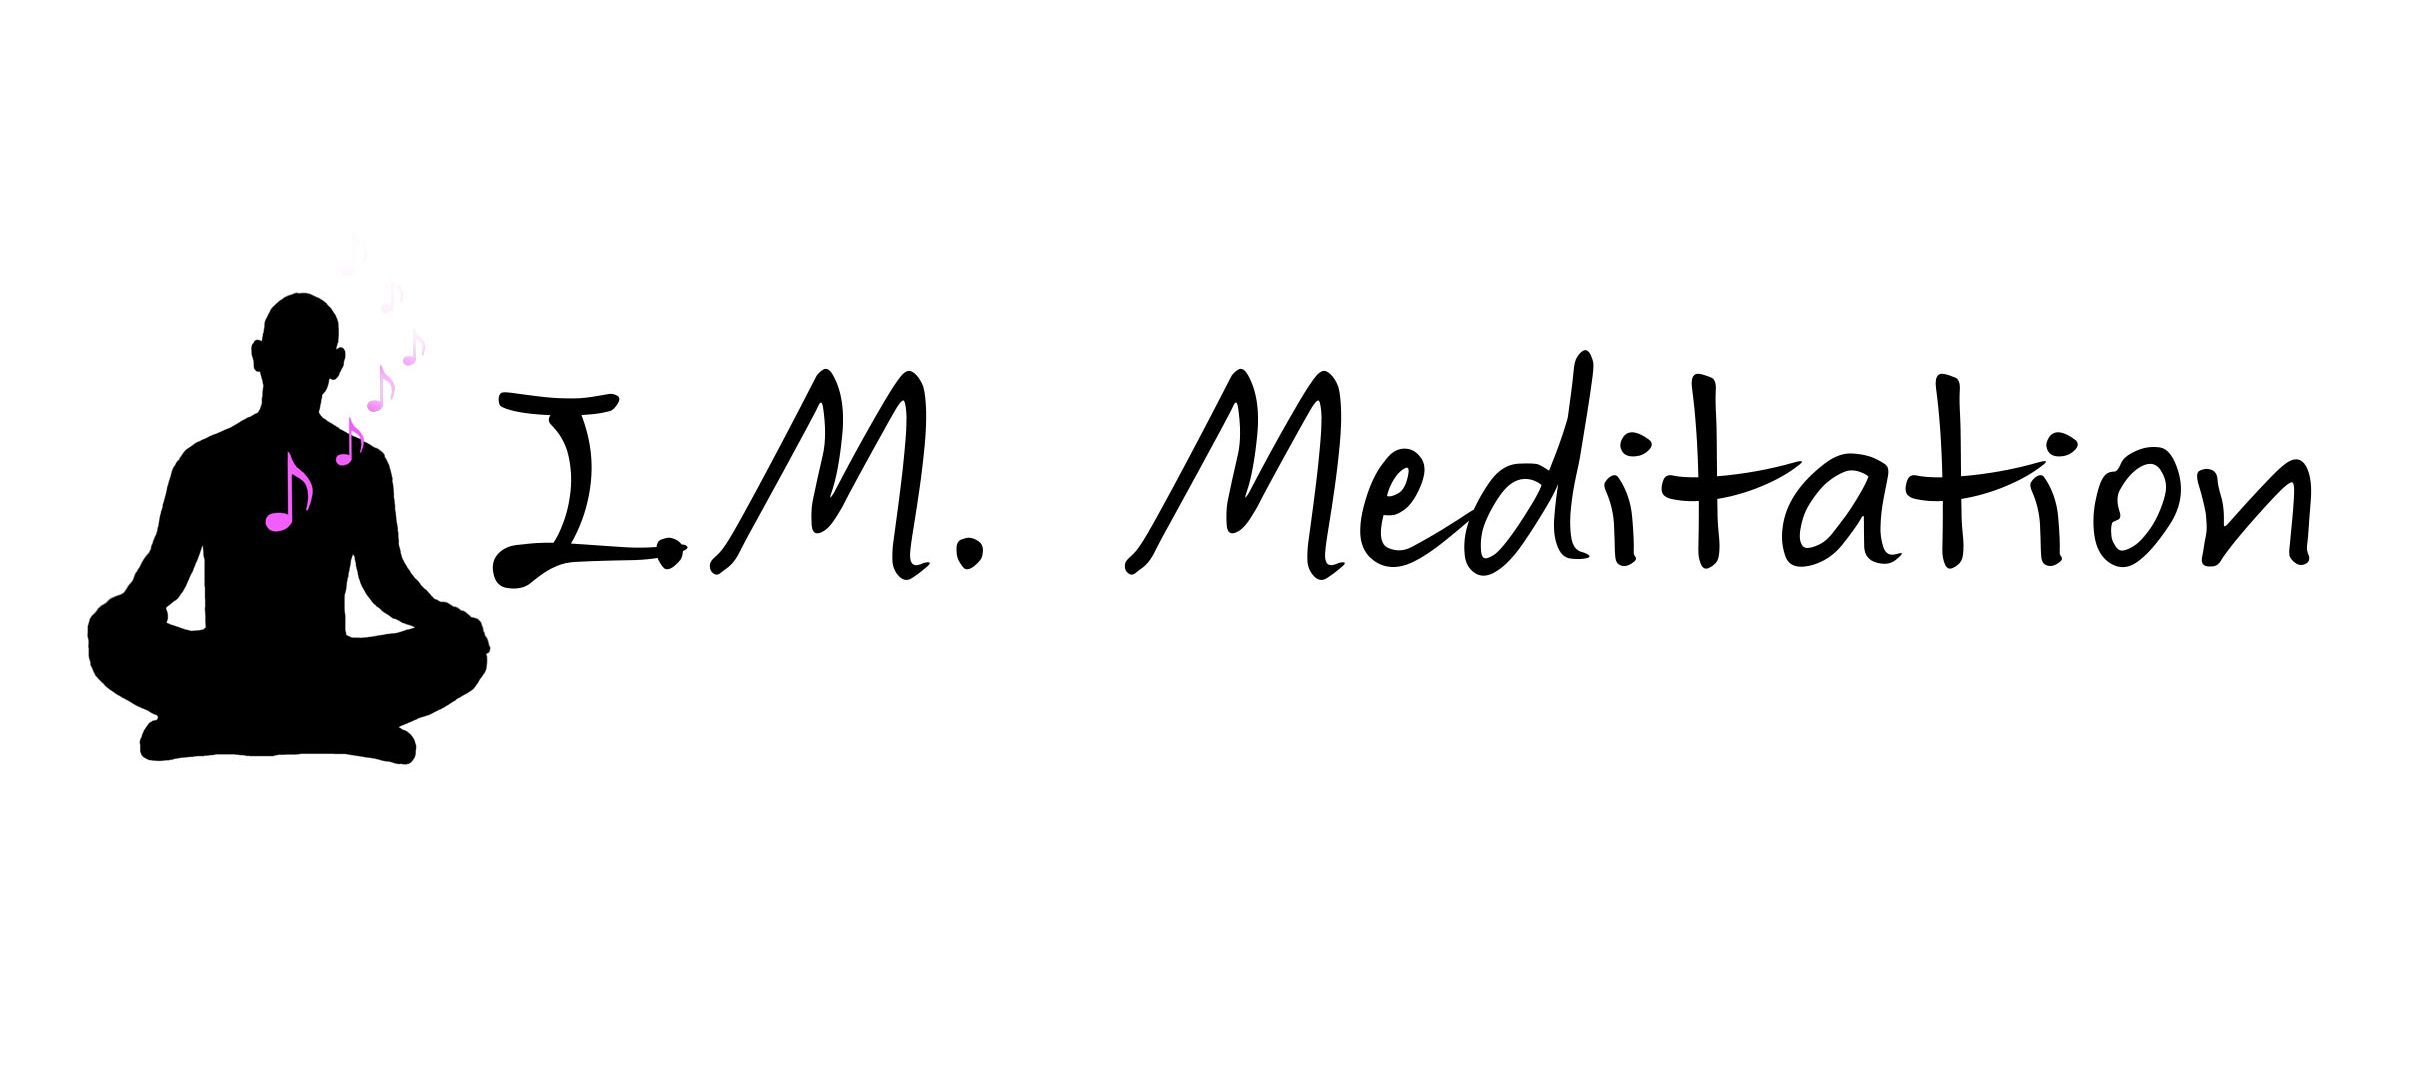 I.M. Meditation - An online meditation training centre for the I.M. Meditation technique.